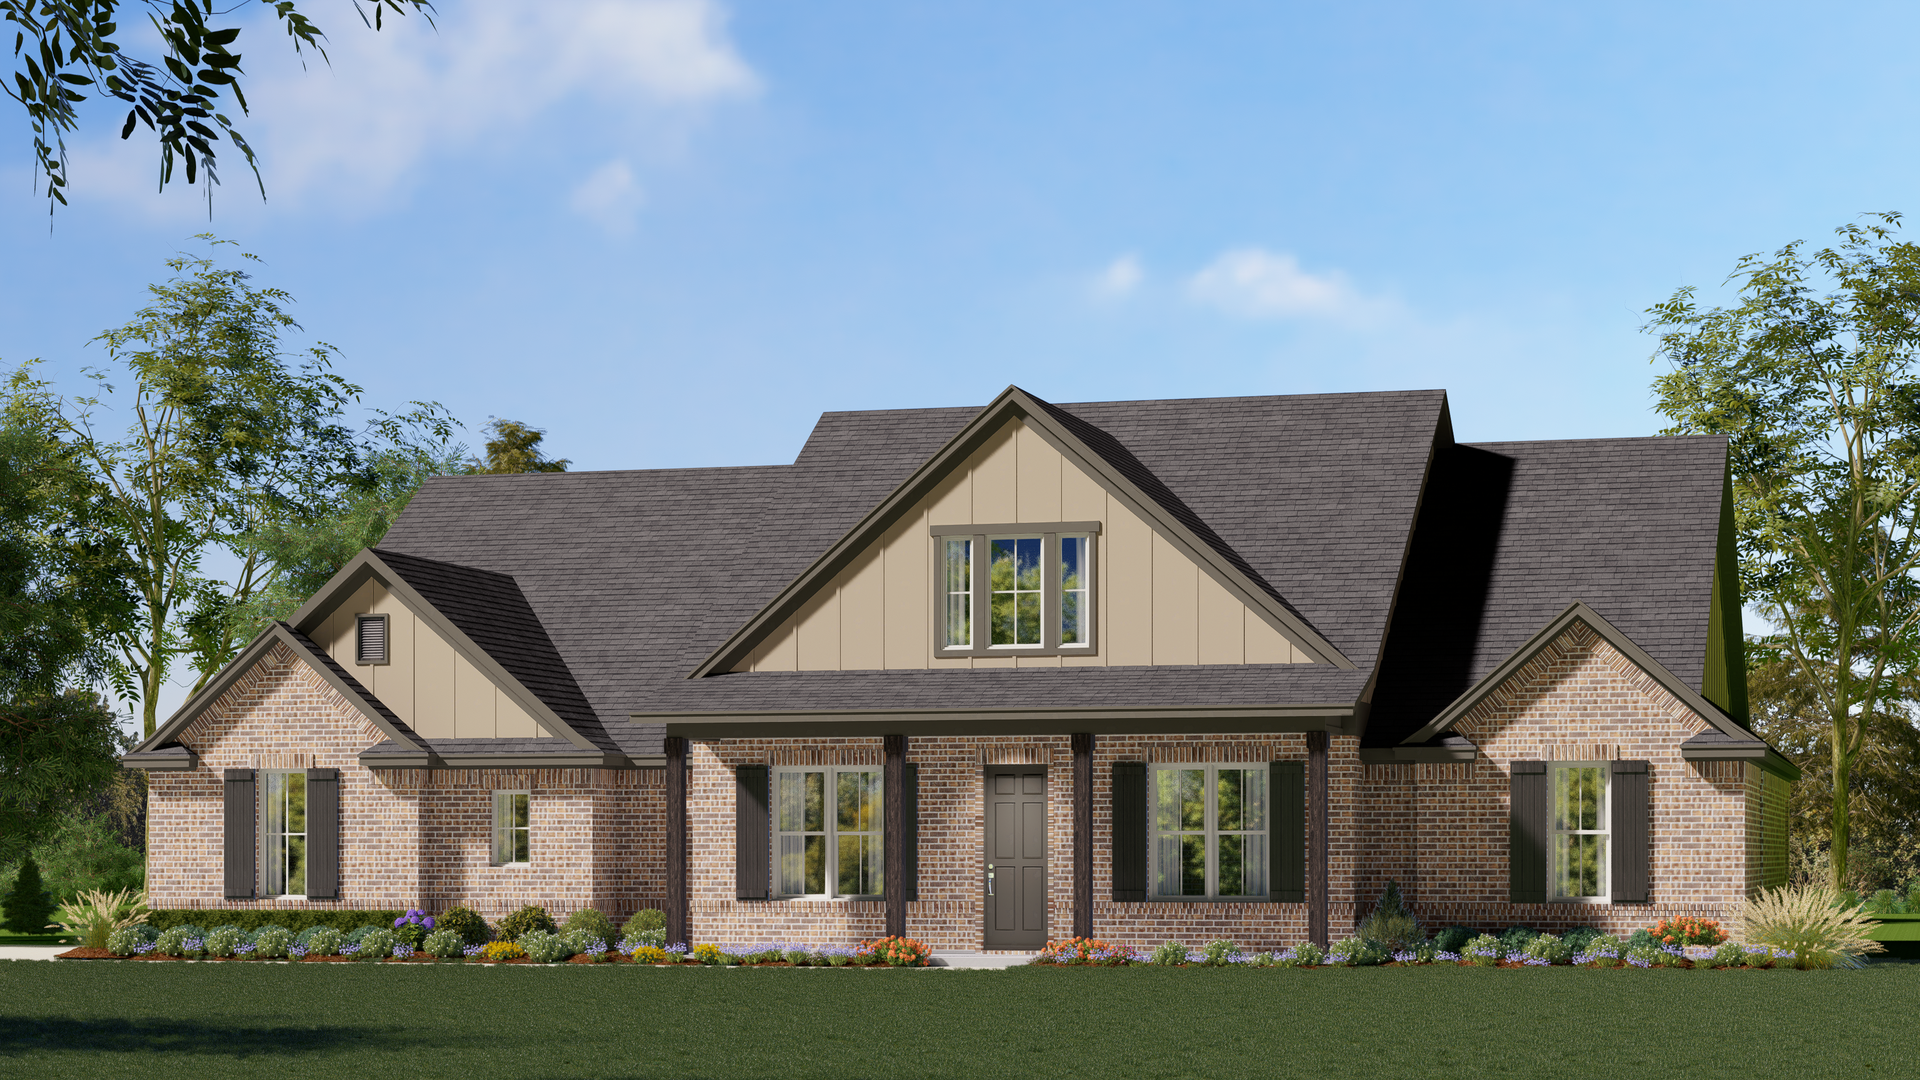 2586 C. 4br New Home in Gunter, TX